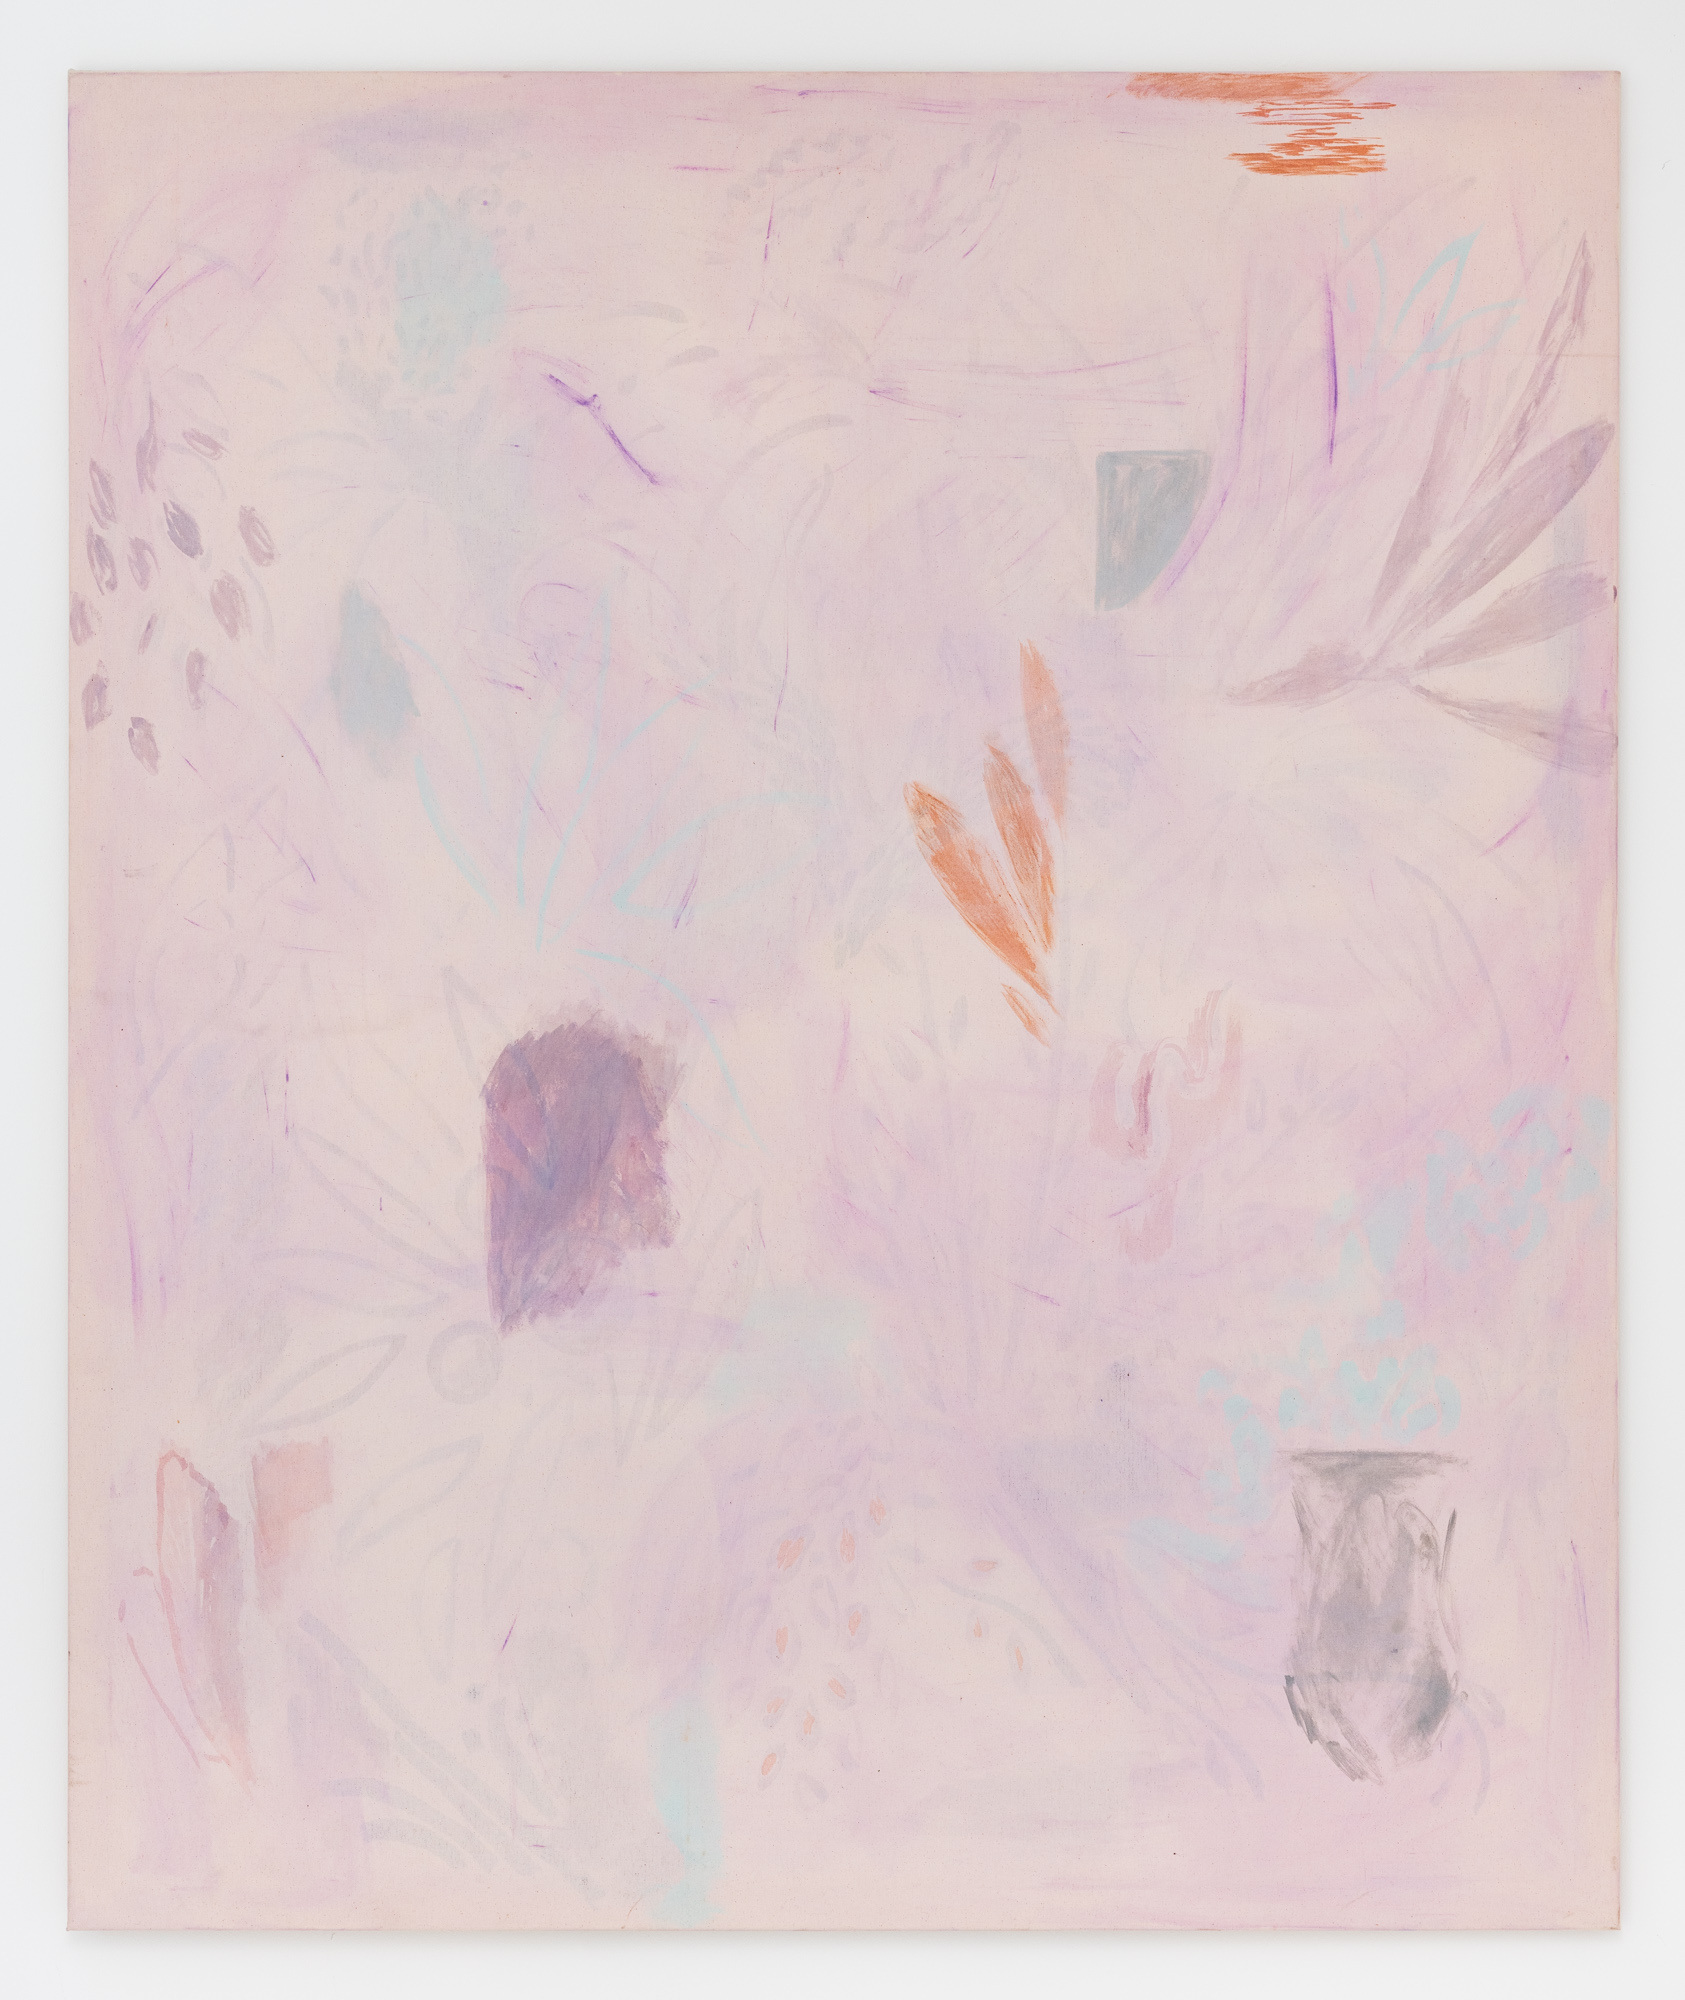 Zoé de Soumagnat, Mirror, 180x150cm, Oil and acrylic on canvas, 2022 